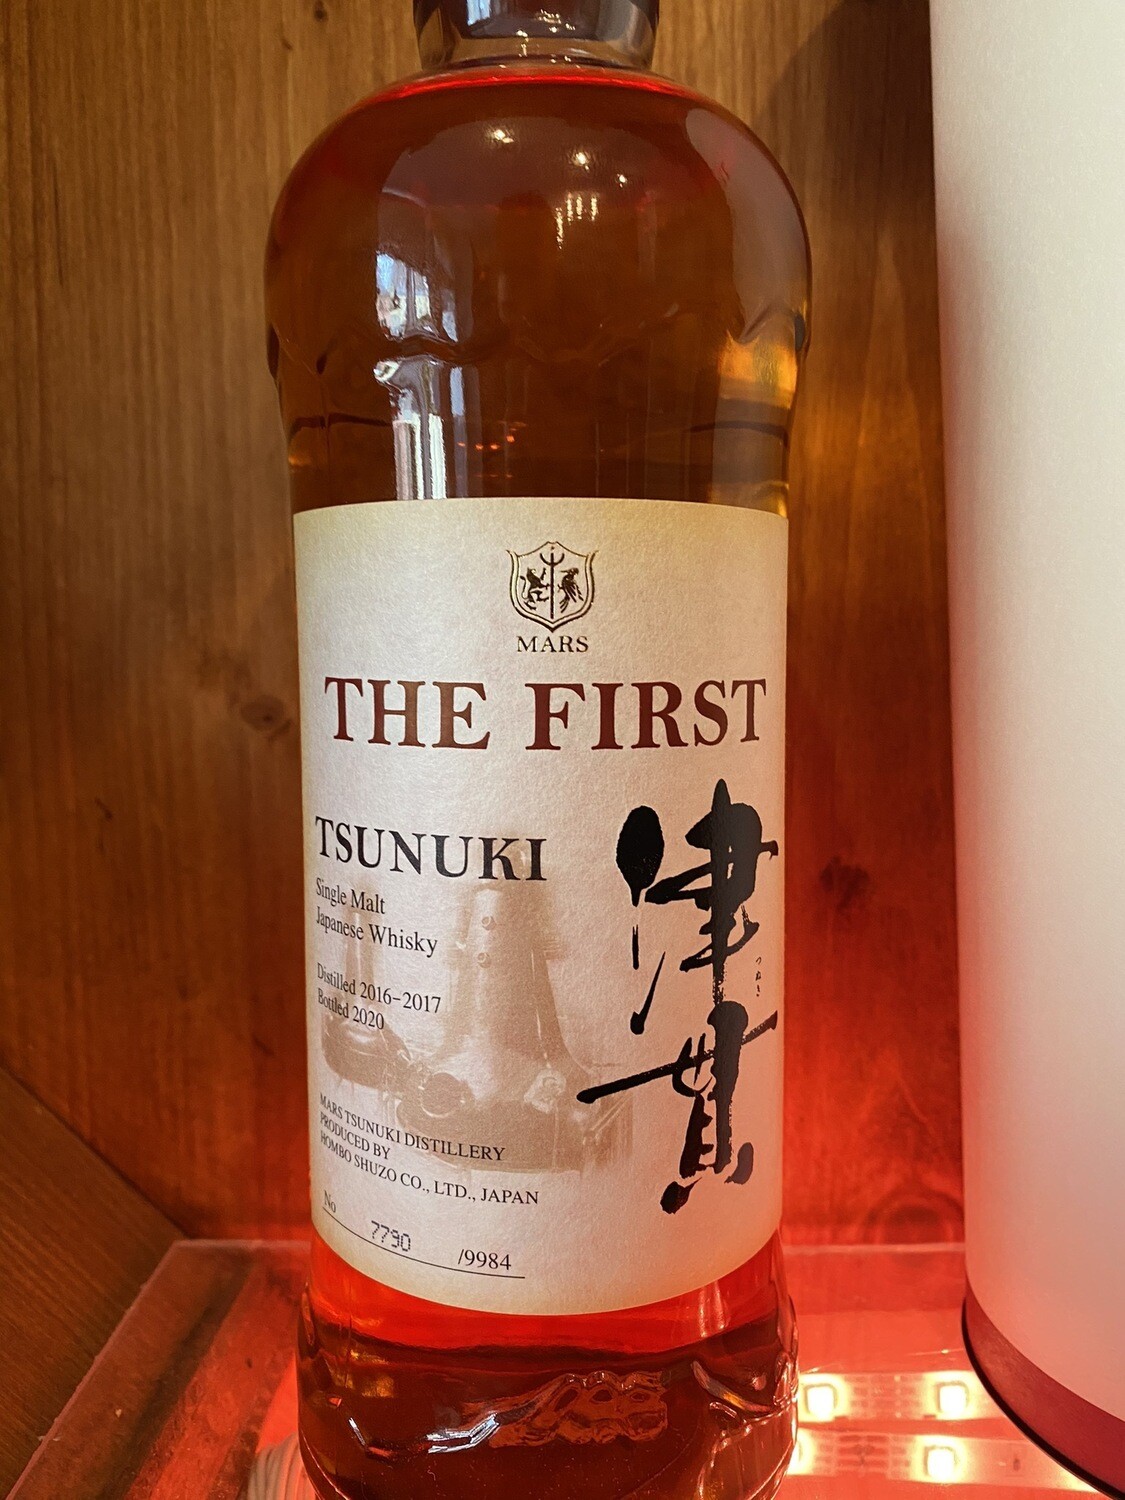 The First Tsunuki Mars Distillery